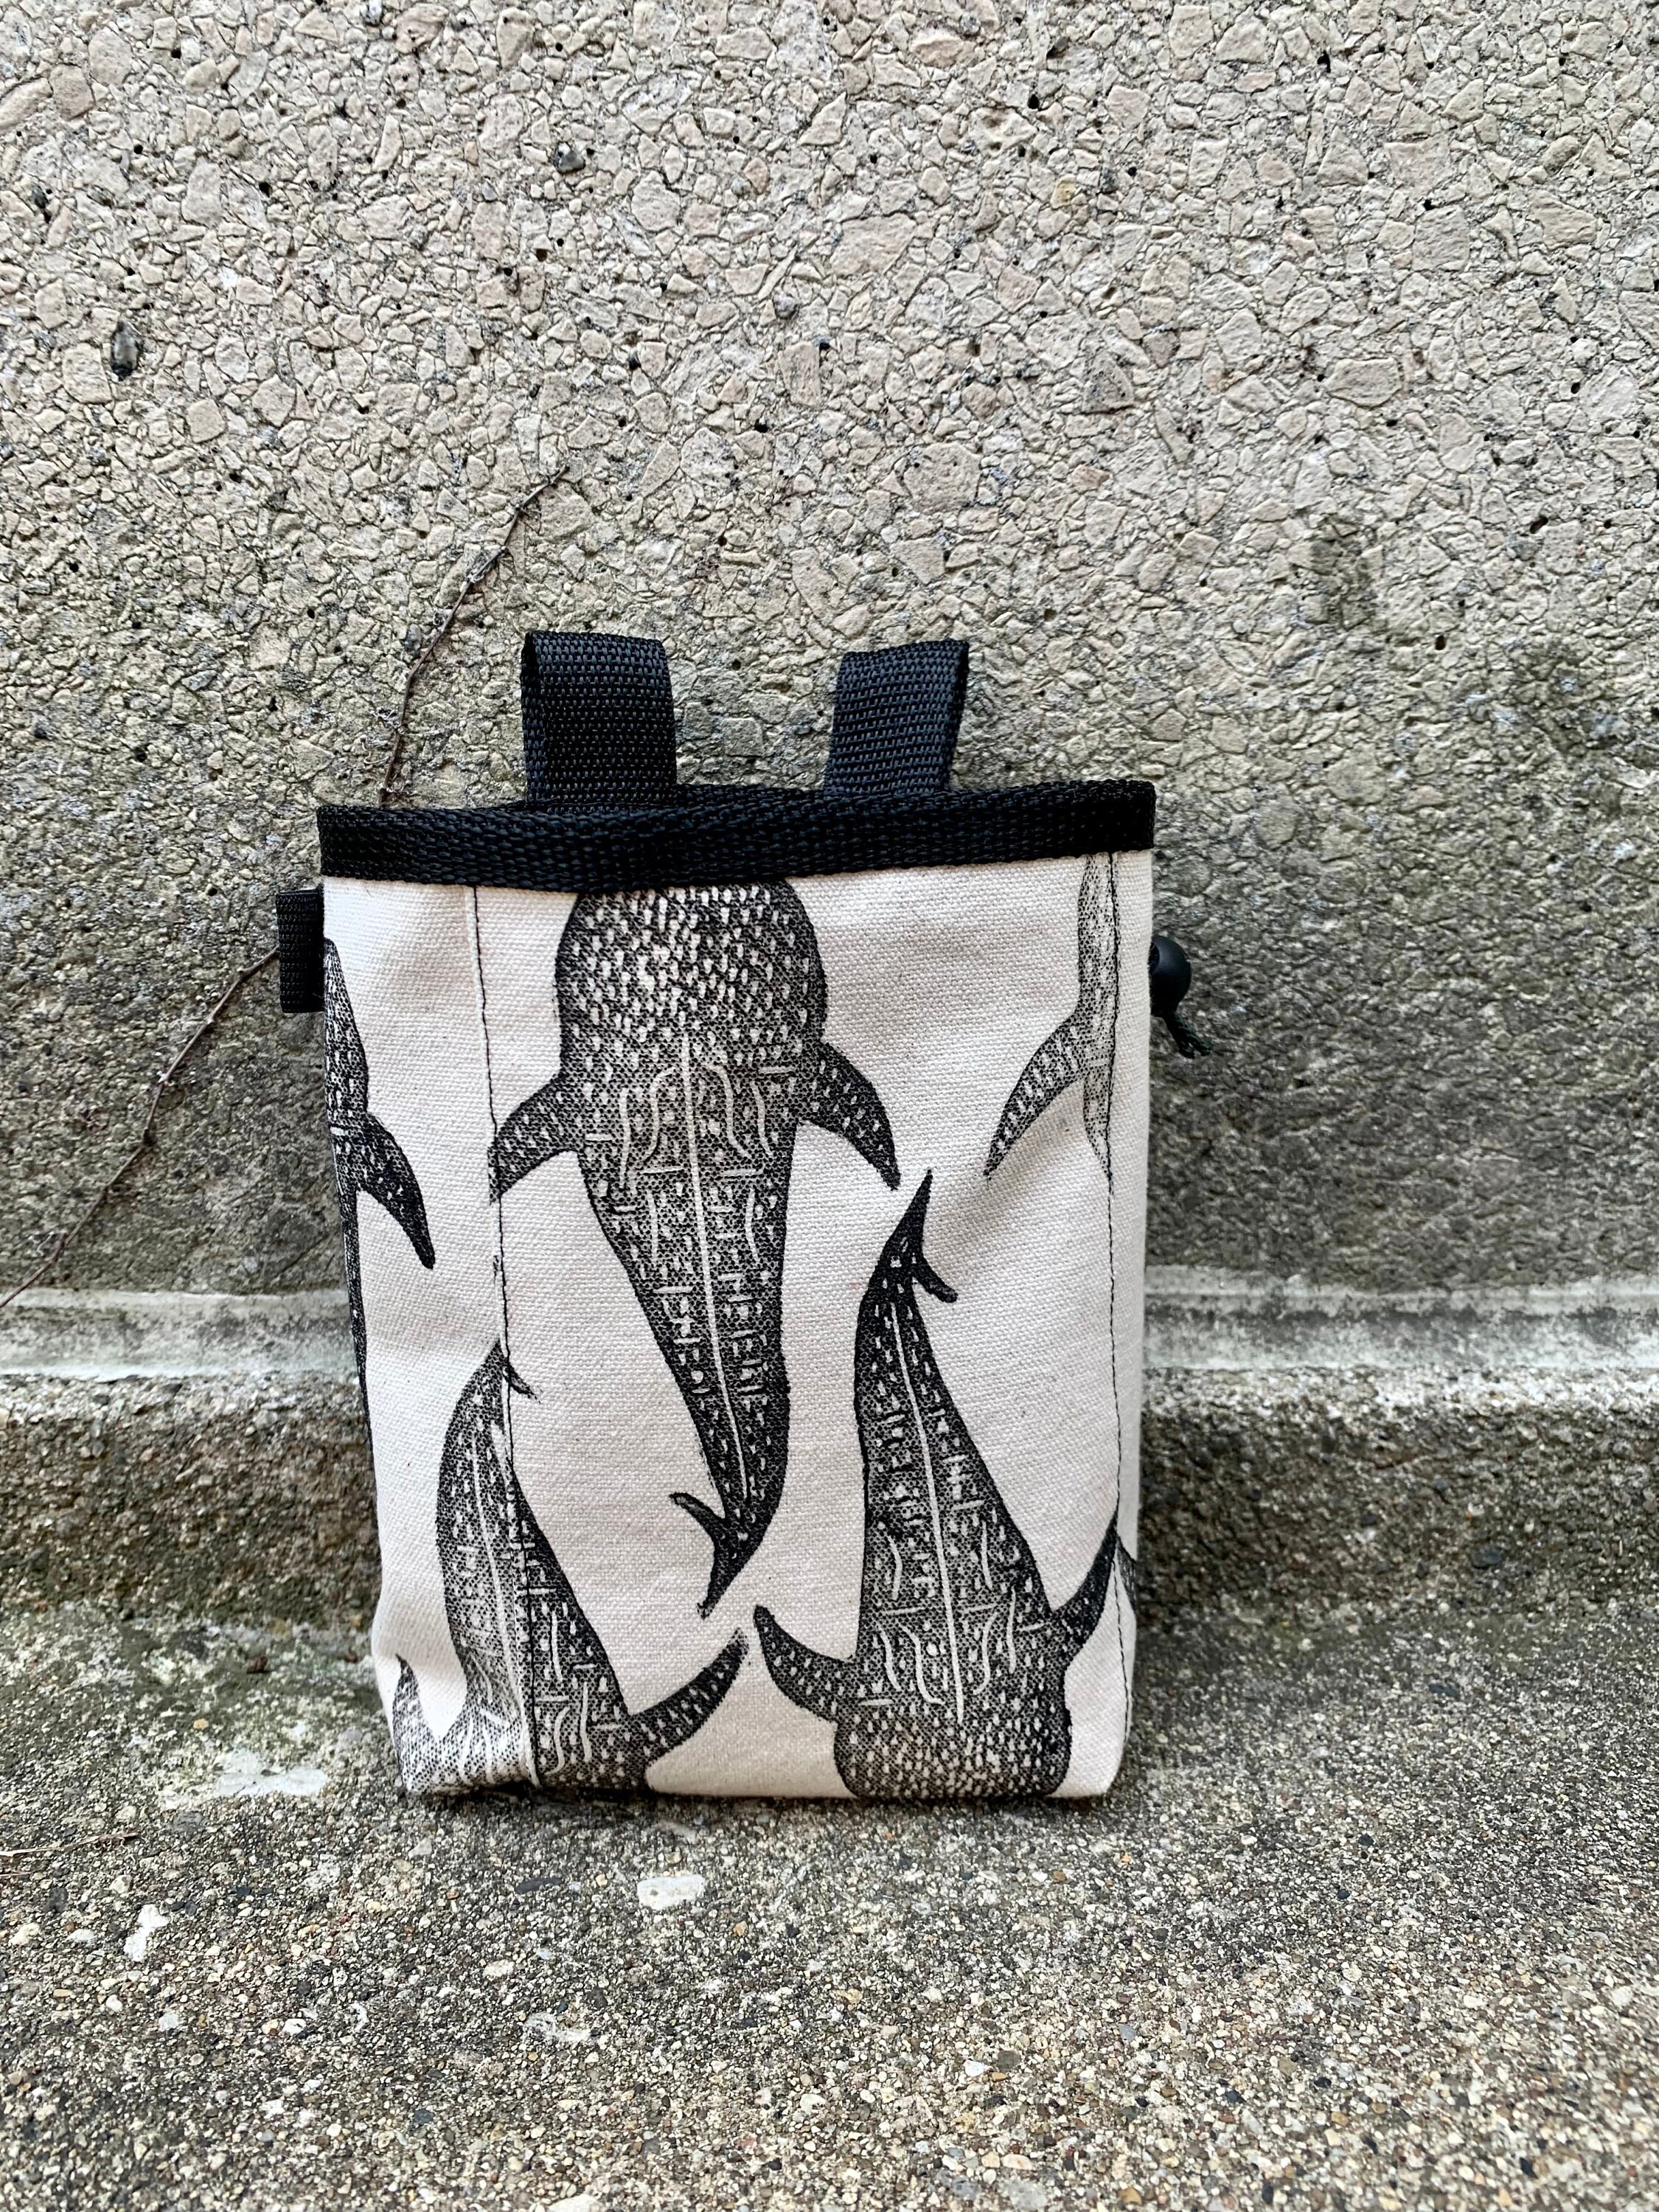 Shark Chalk Bag - Cool Animal Chalk Bag Edition for Rock Climbing, Rock  Climber Gift